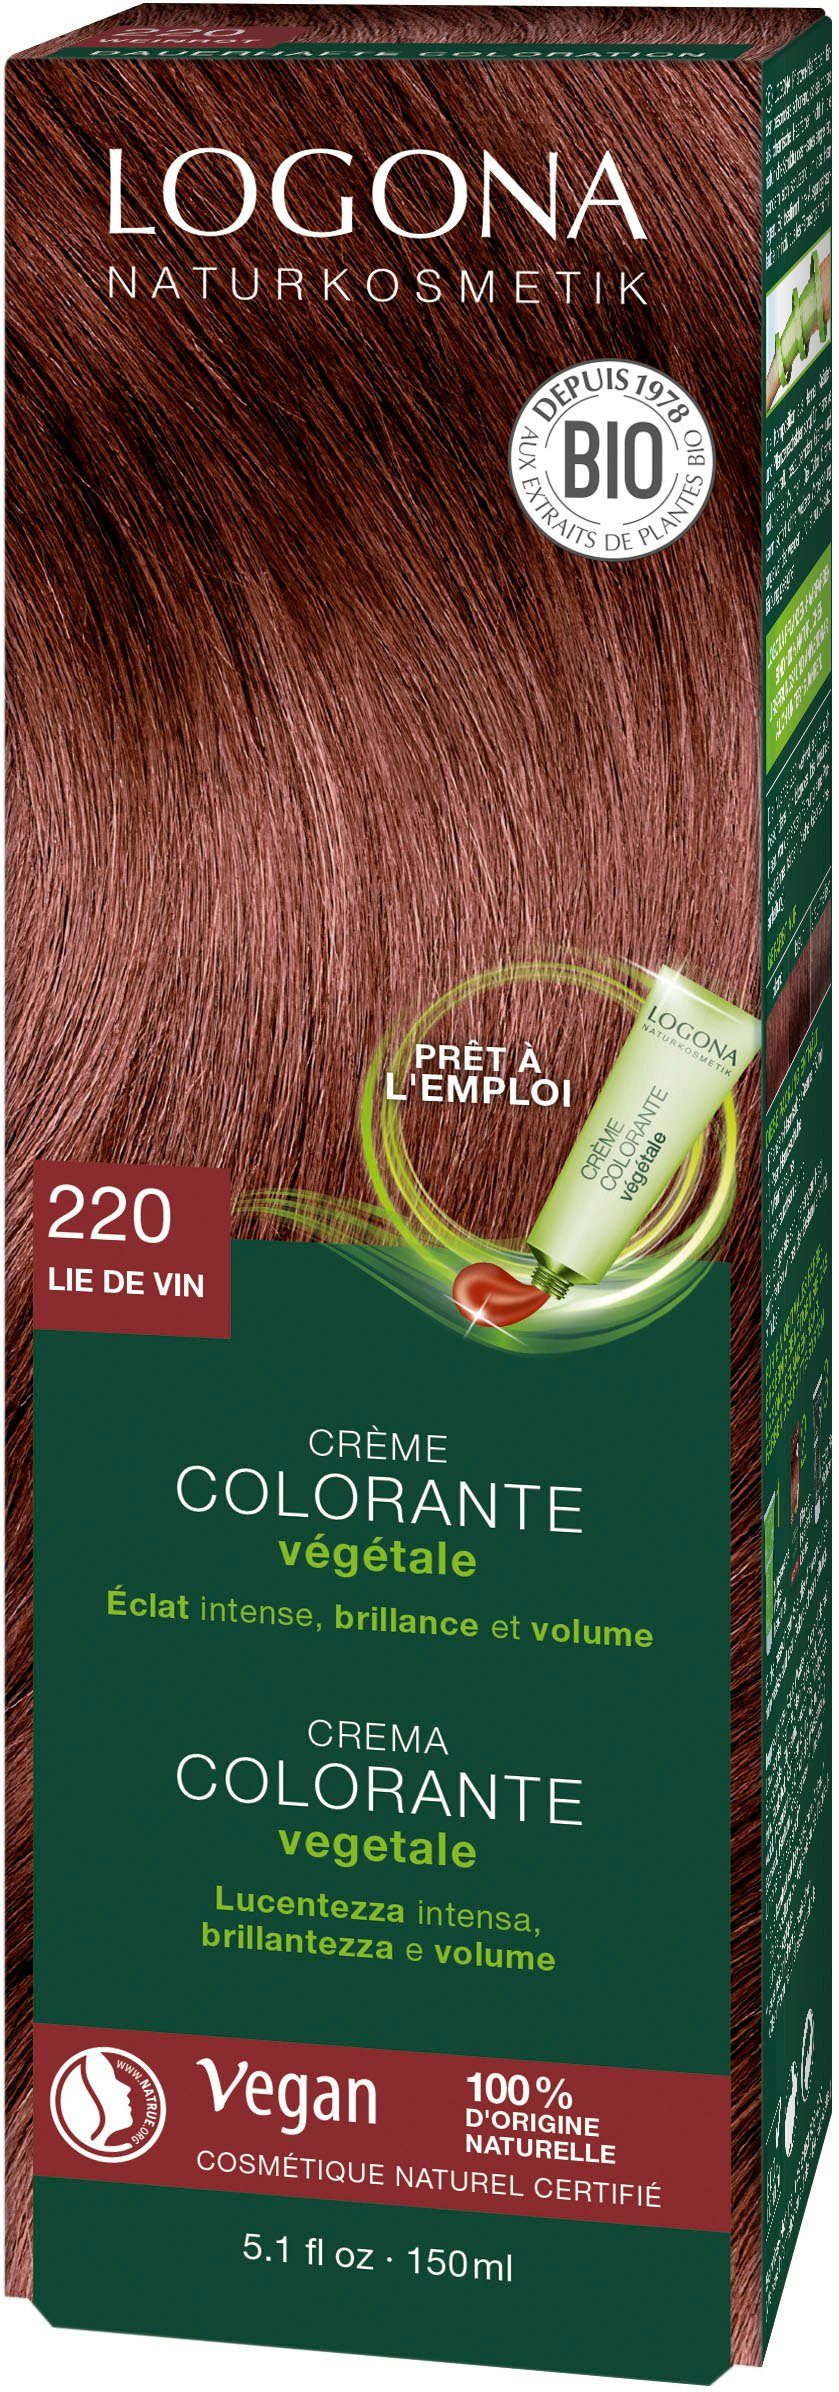 LOGONA Haarfarbe Logona Pflanzen-Haarfarbe Creme 220 weinrot